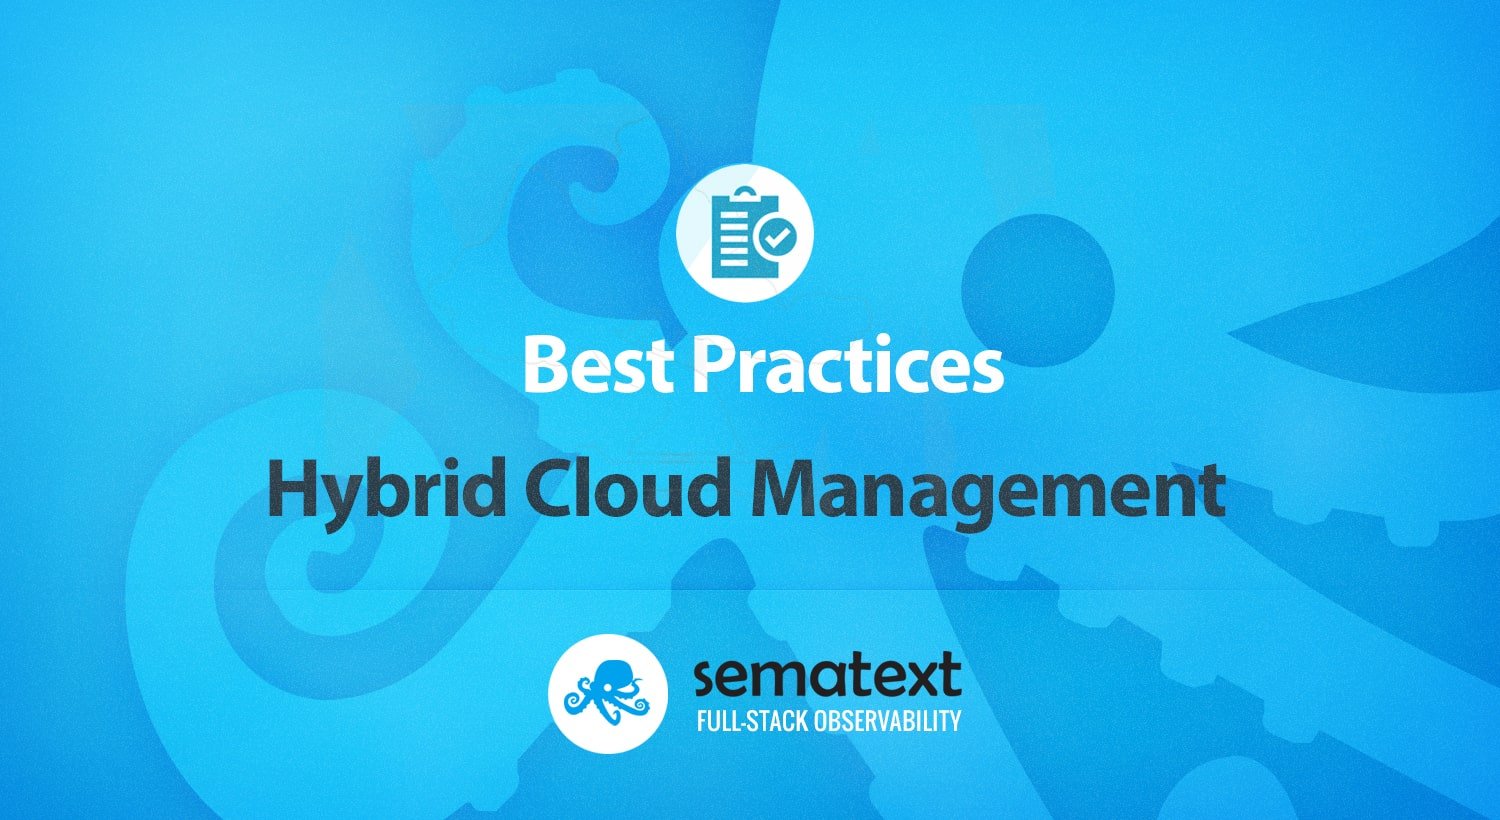 Best Practices for Hybrid Cloud Management